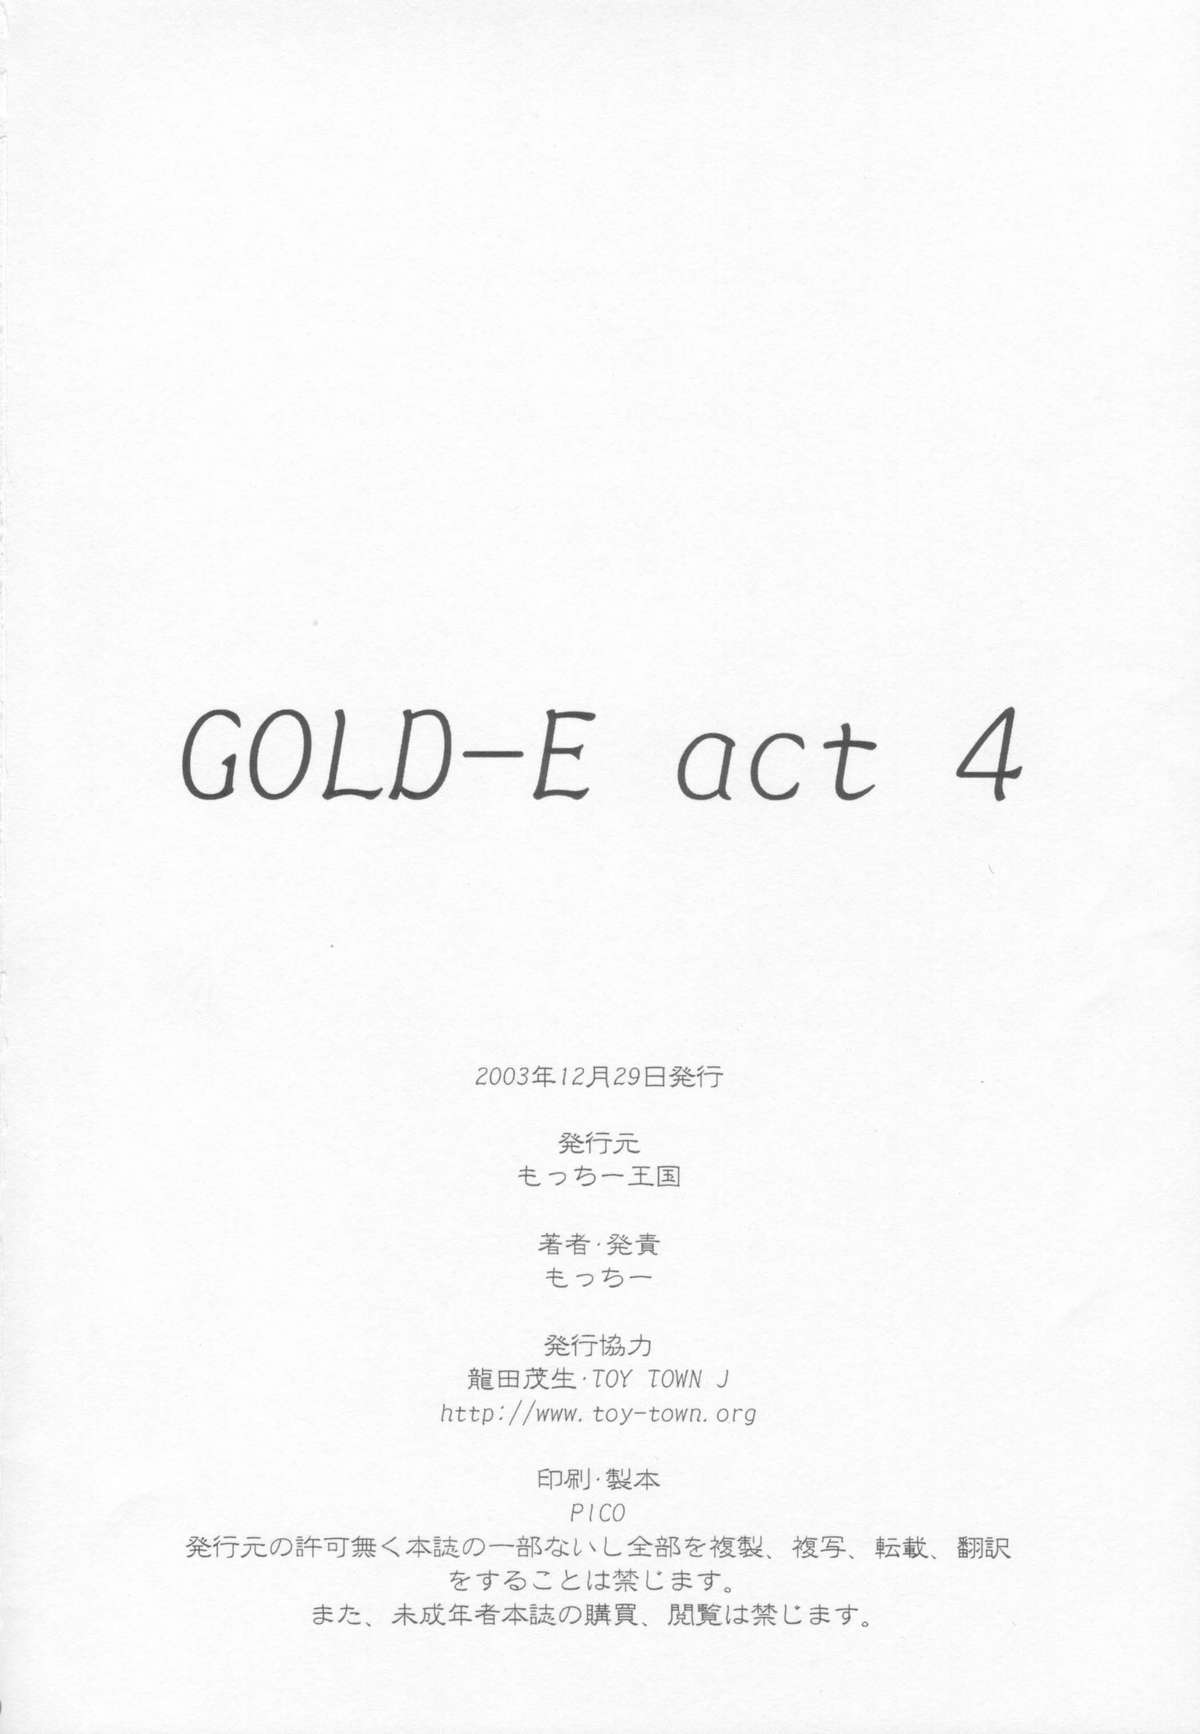 Motchie Gold E Act 4 